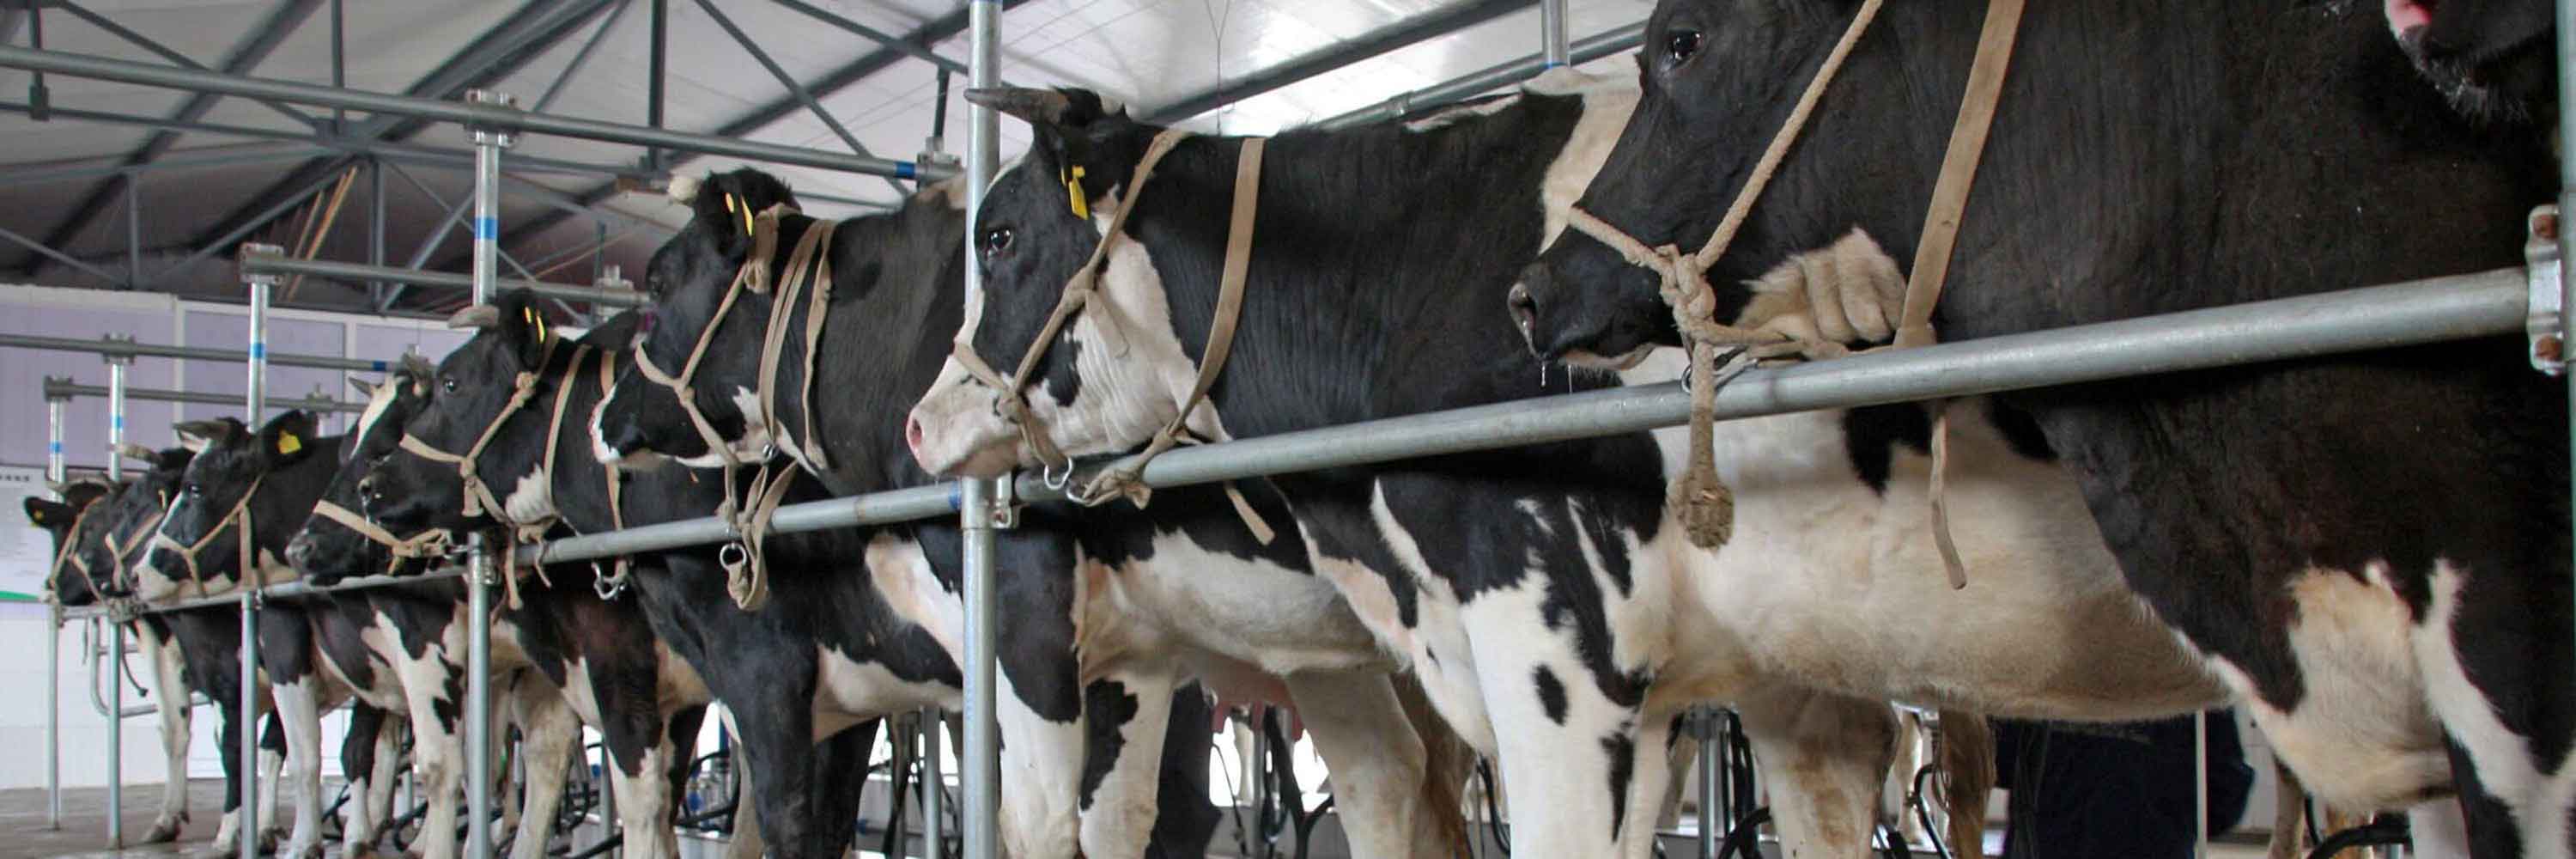 Cows on factory farm